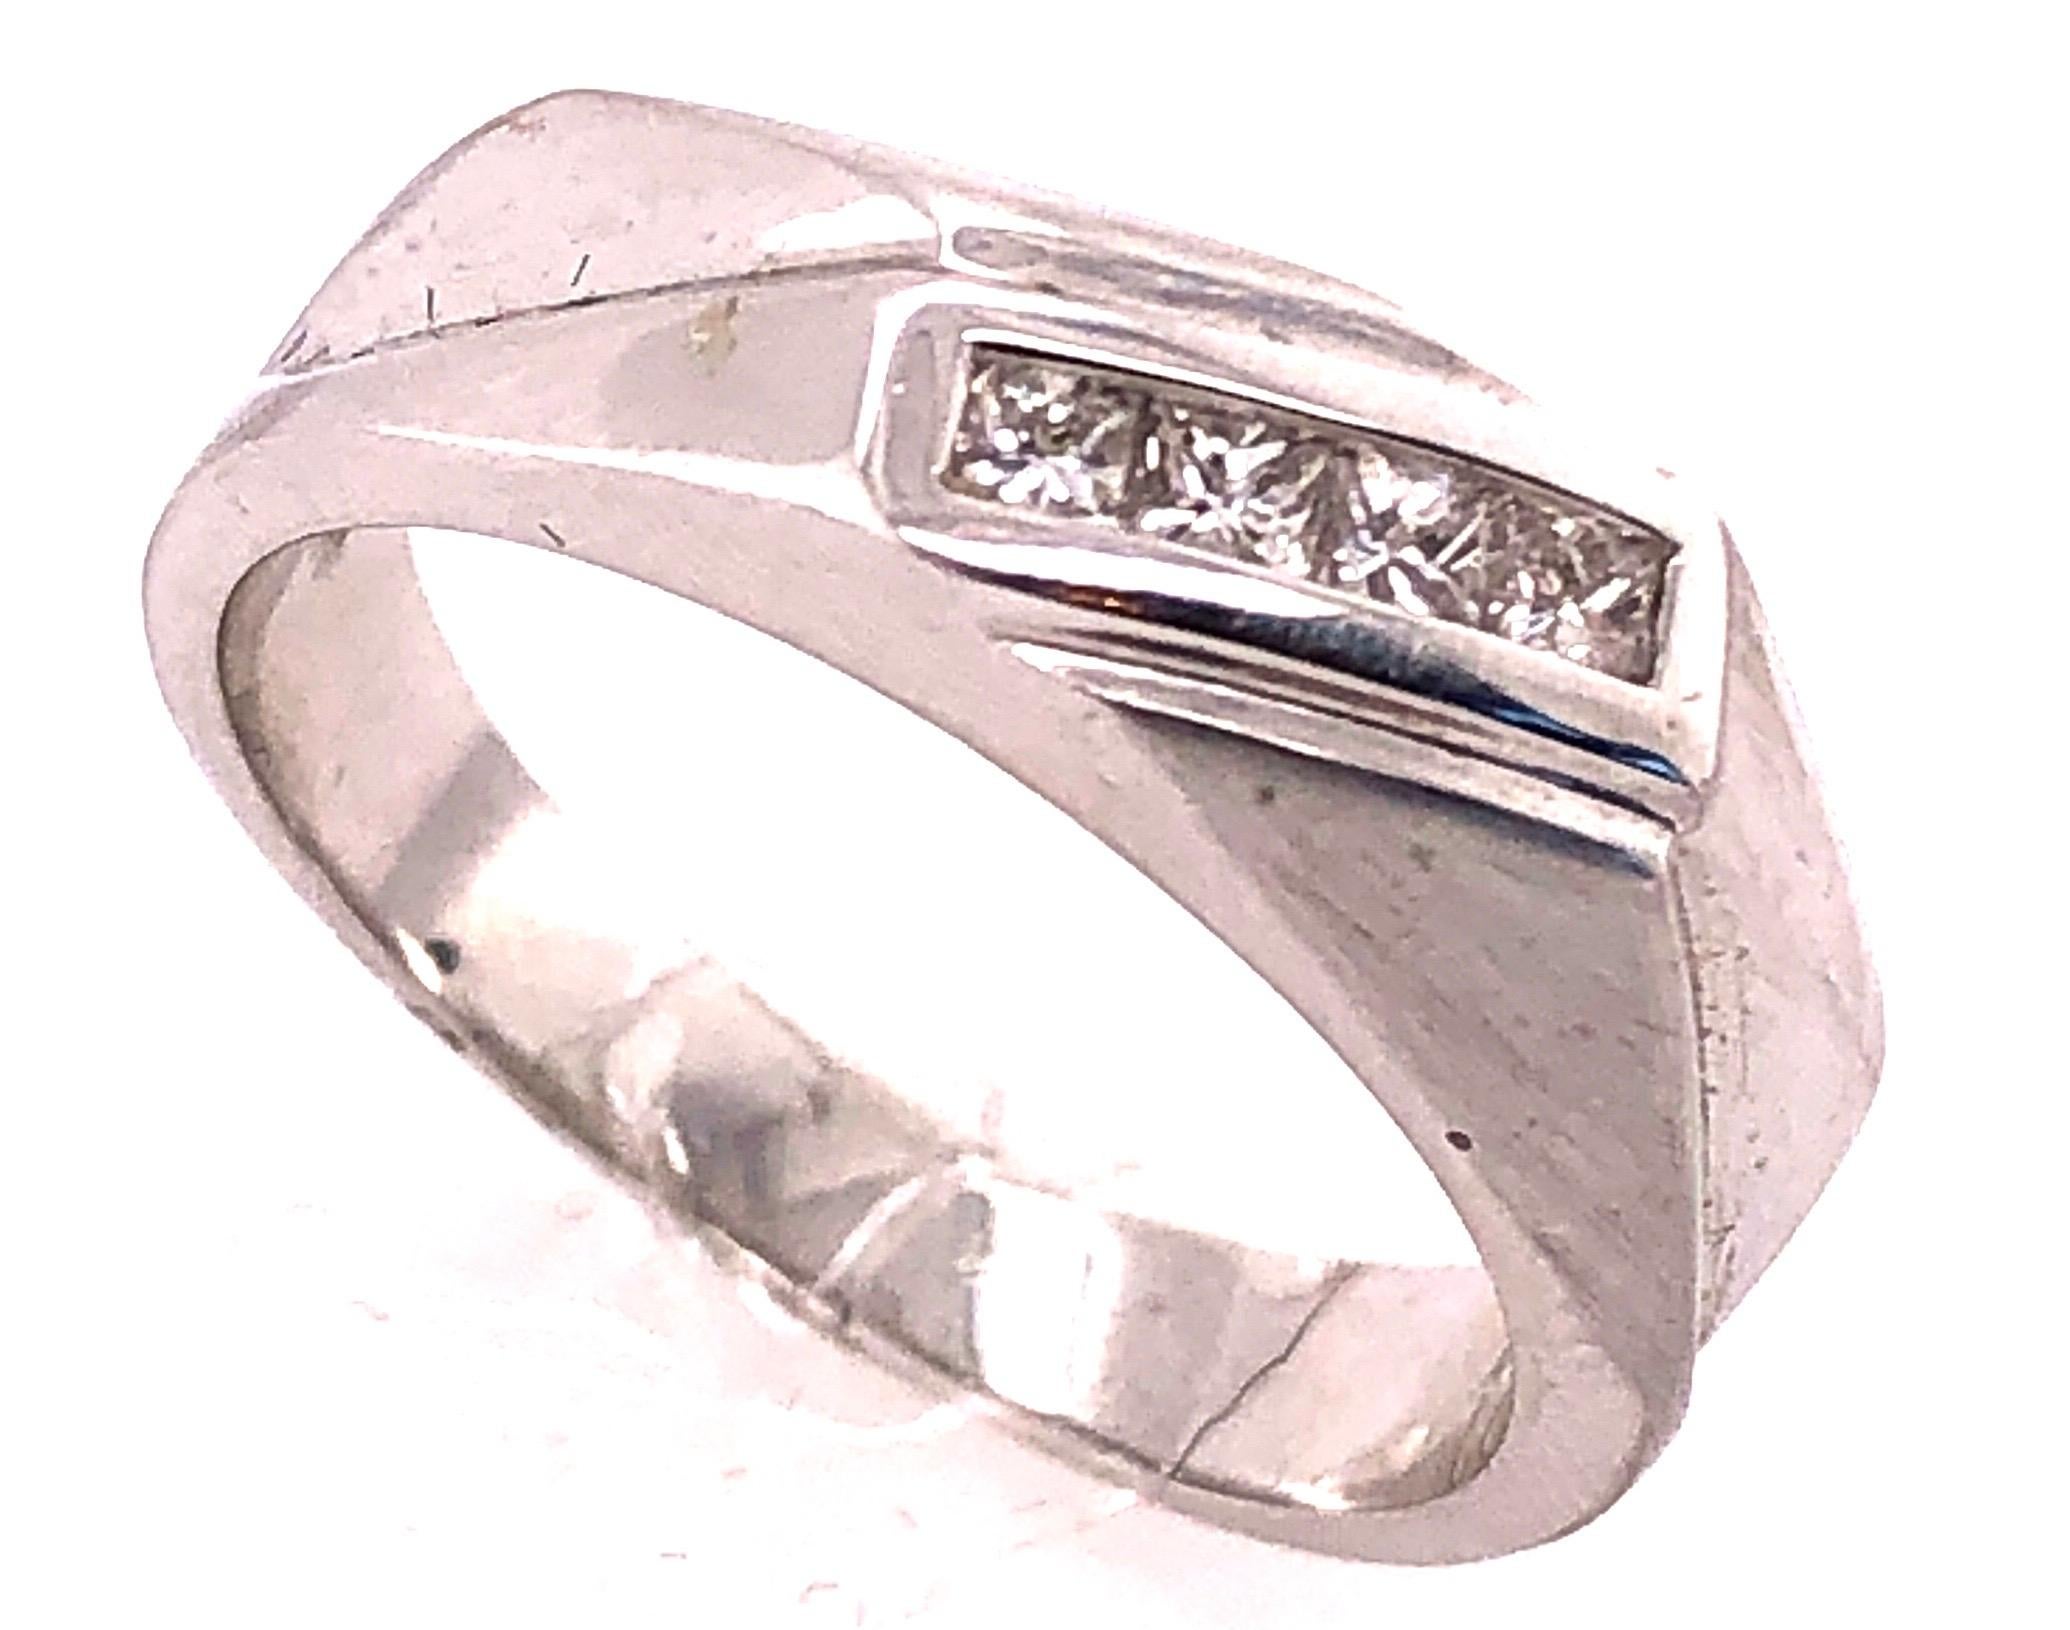 14 Karat White Gold Wedding Bridal Band Ring with Four Diamonds 
0.25 Total Diamond Weight.
Size 9
7.6 grams total weight.
